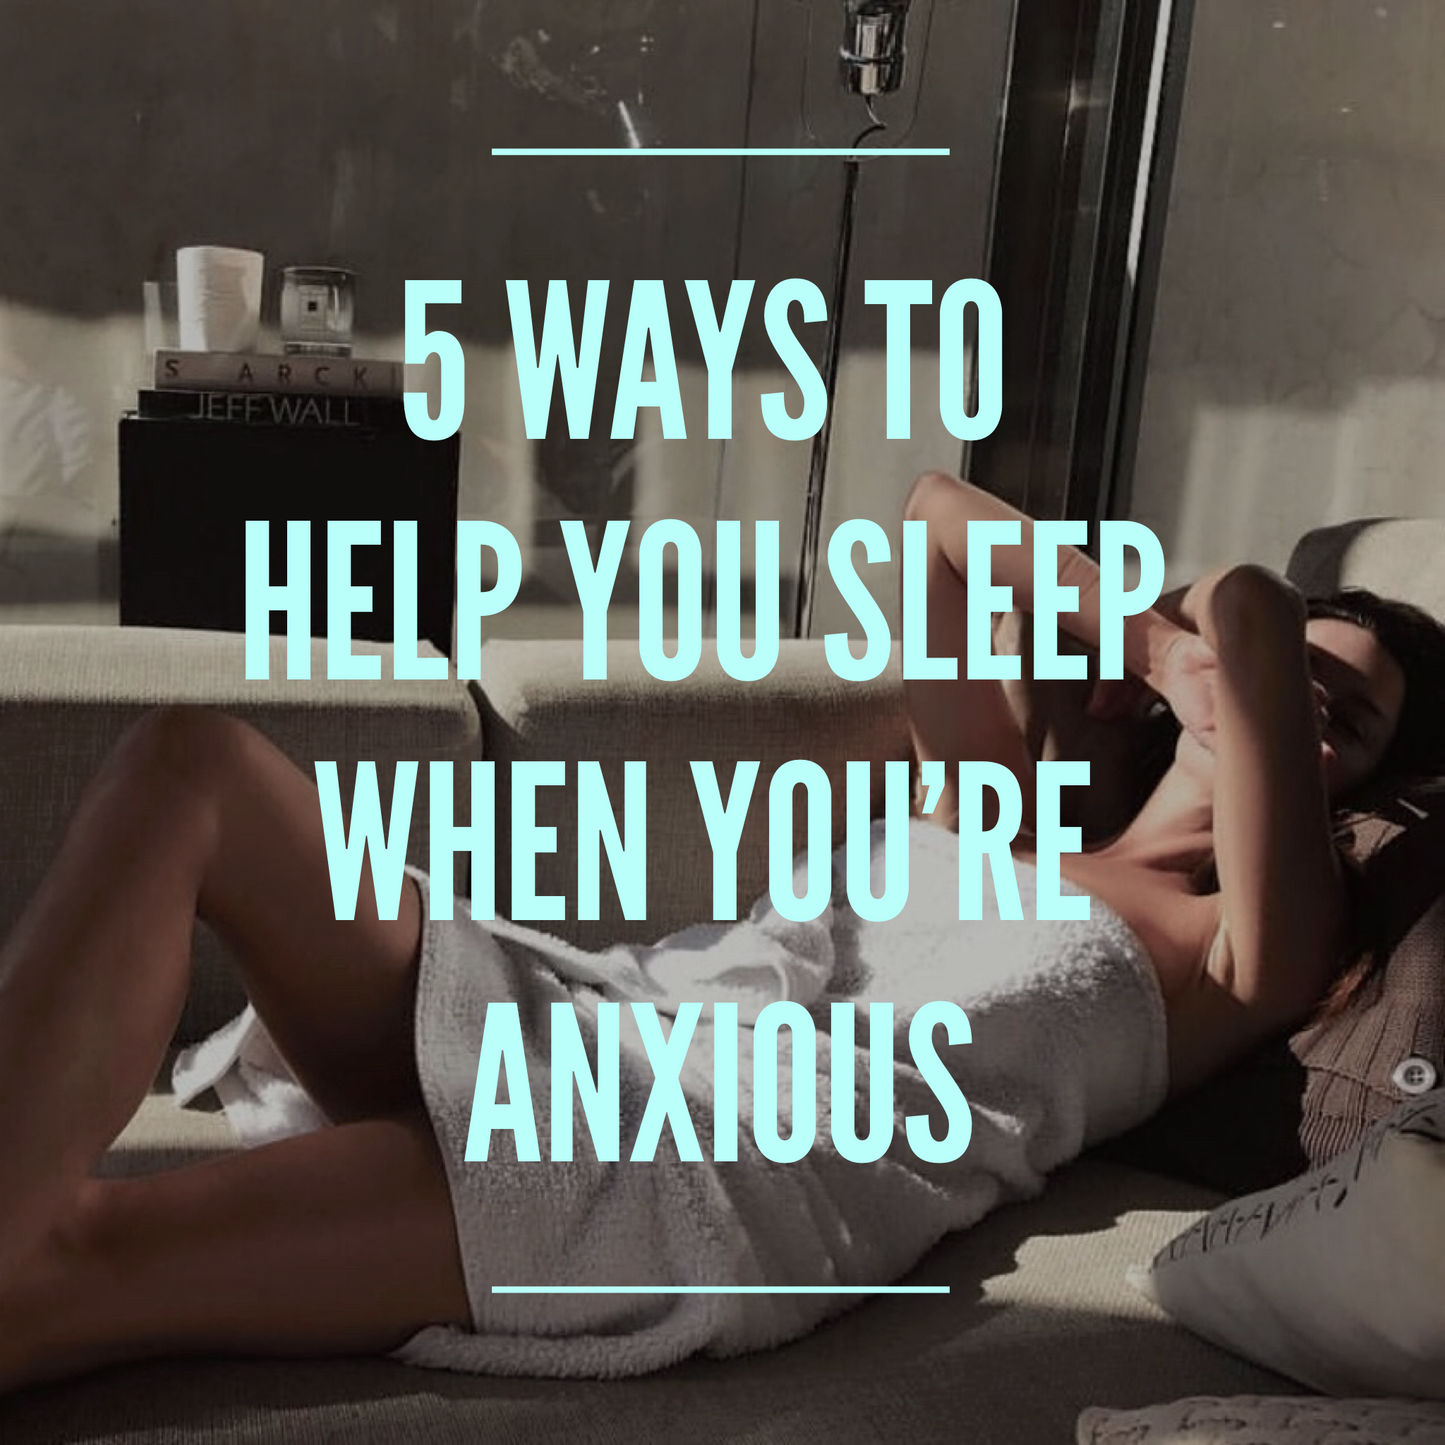 5 Ways To Help You Sleep When You're Anxious